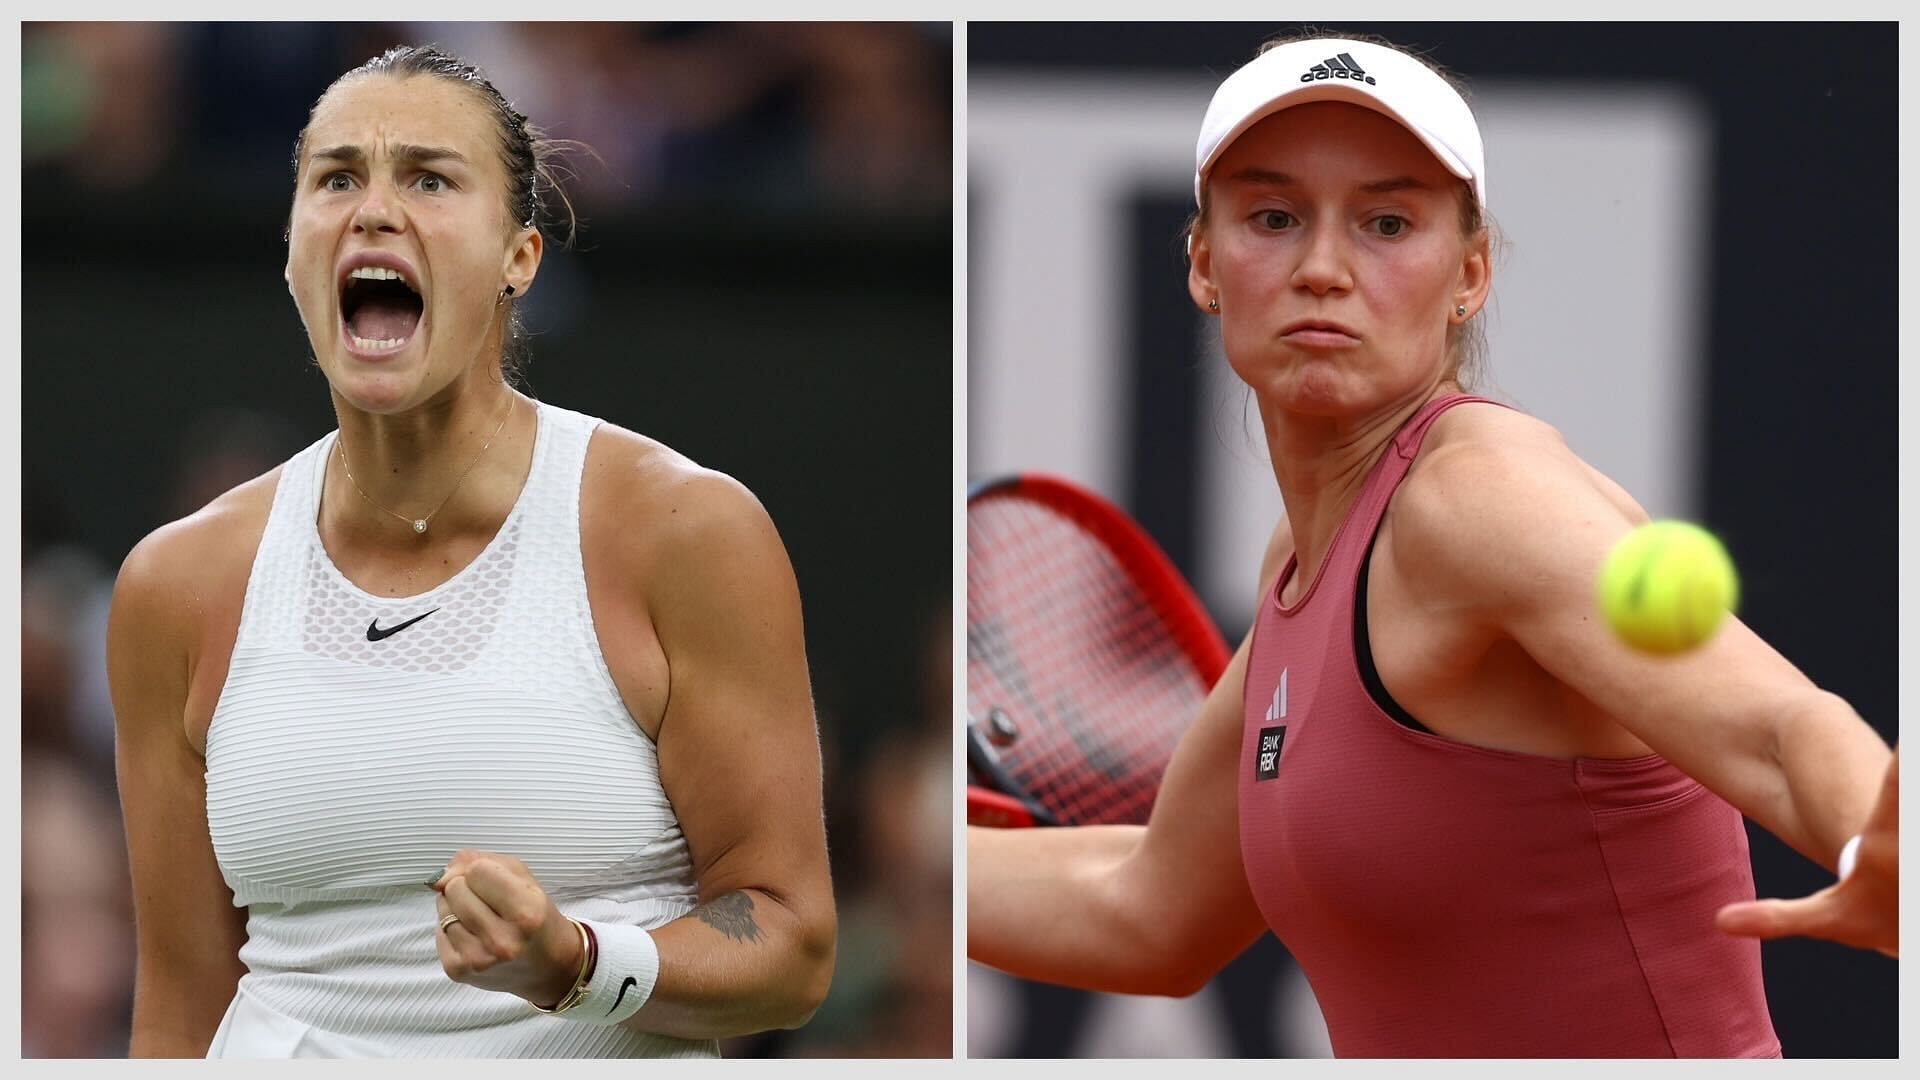 Aryna Sabalenka, Elena Rybakina and others have spoken up about the WTA